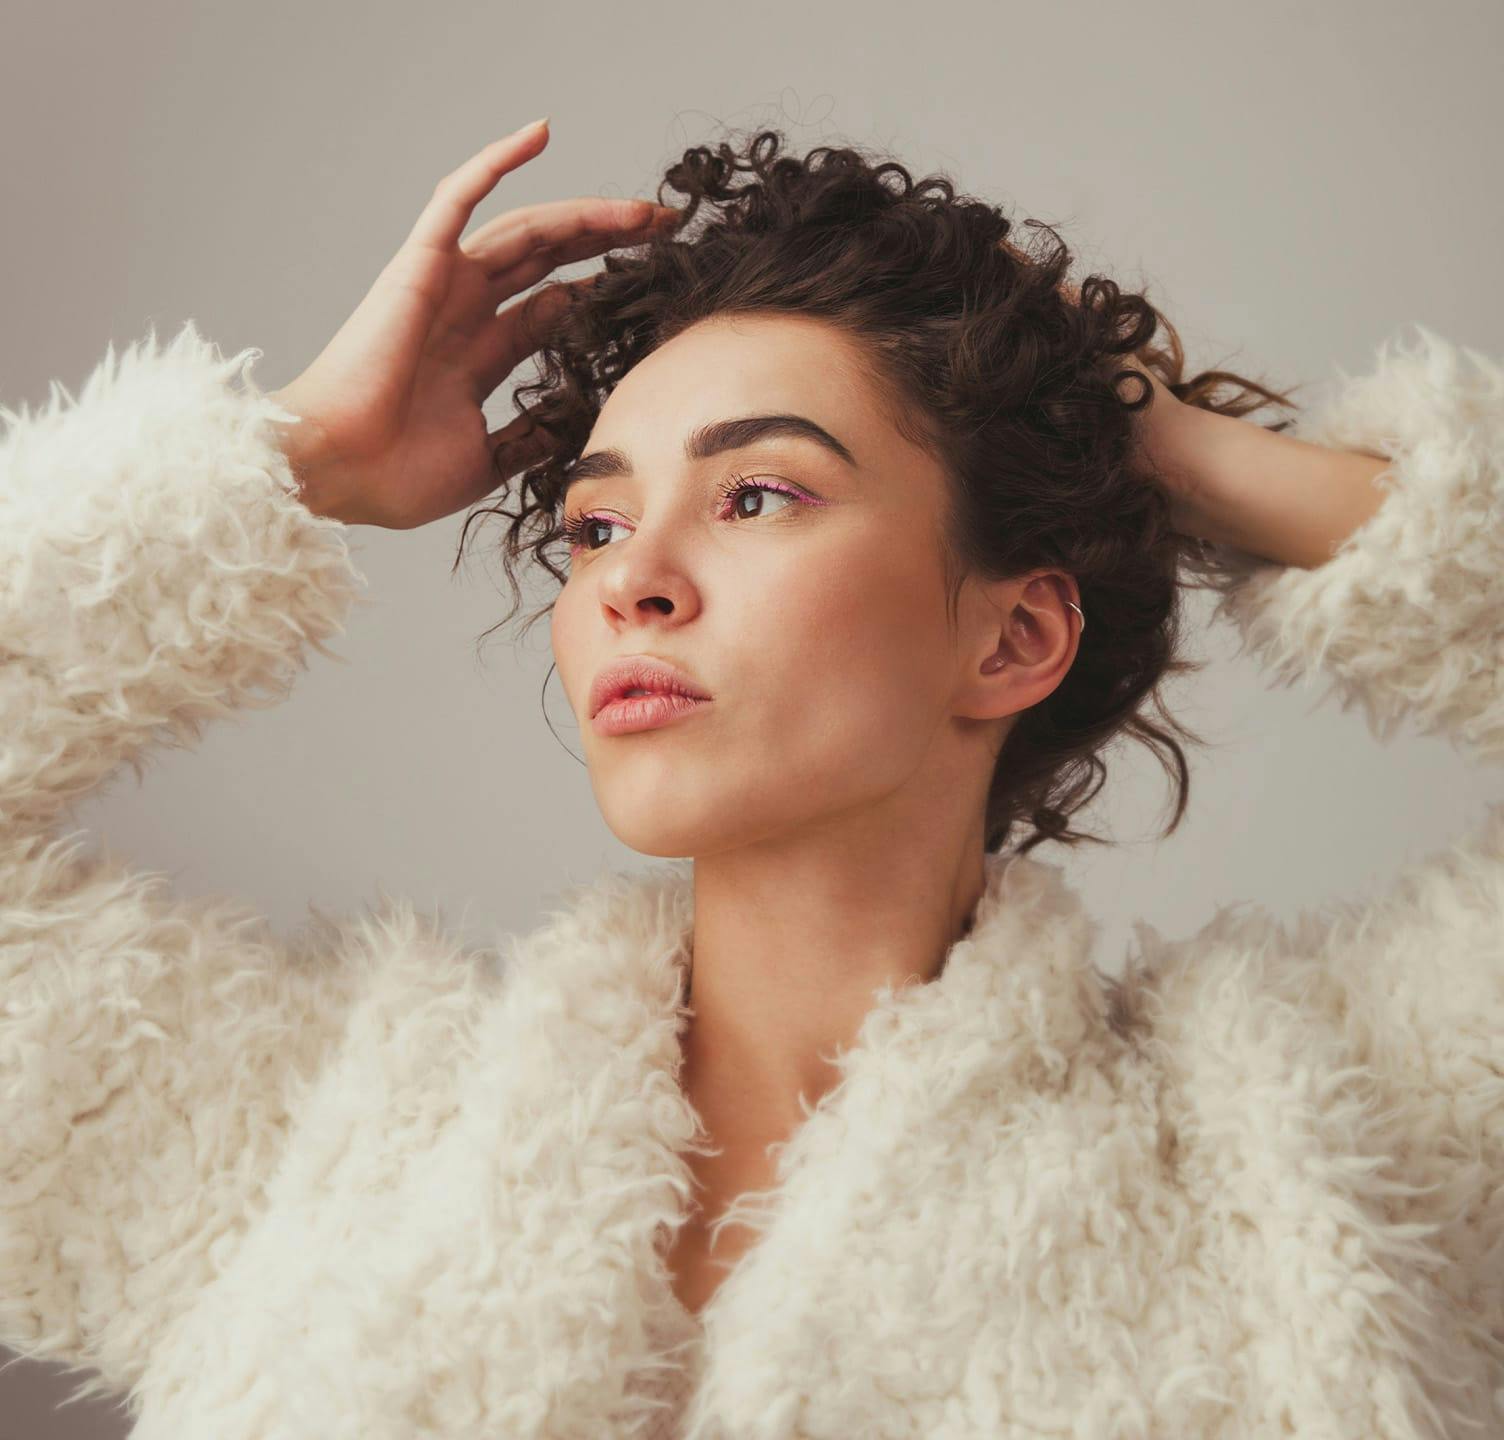 Woman wearing Fur coat adjusting her hair